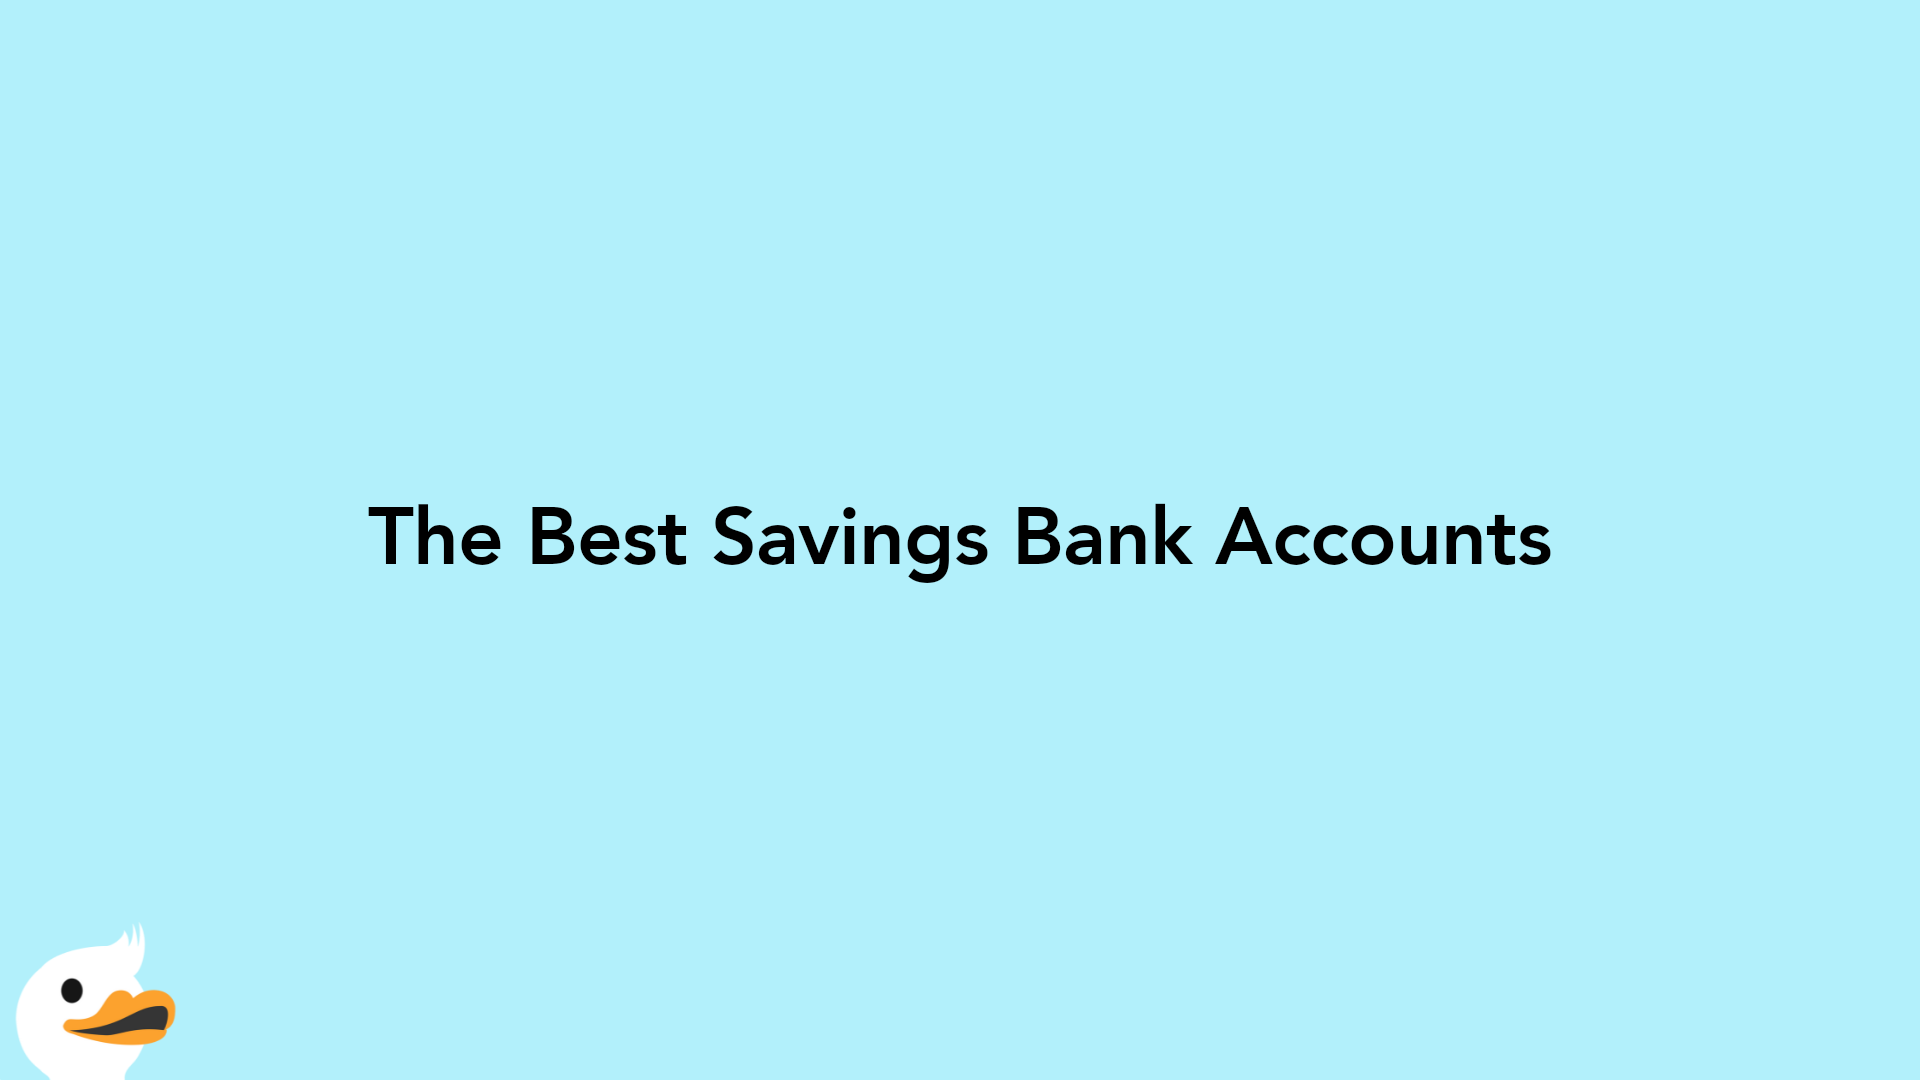 The Best Savings Bank Accounts